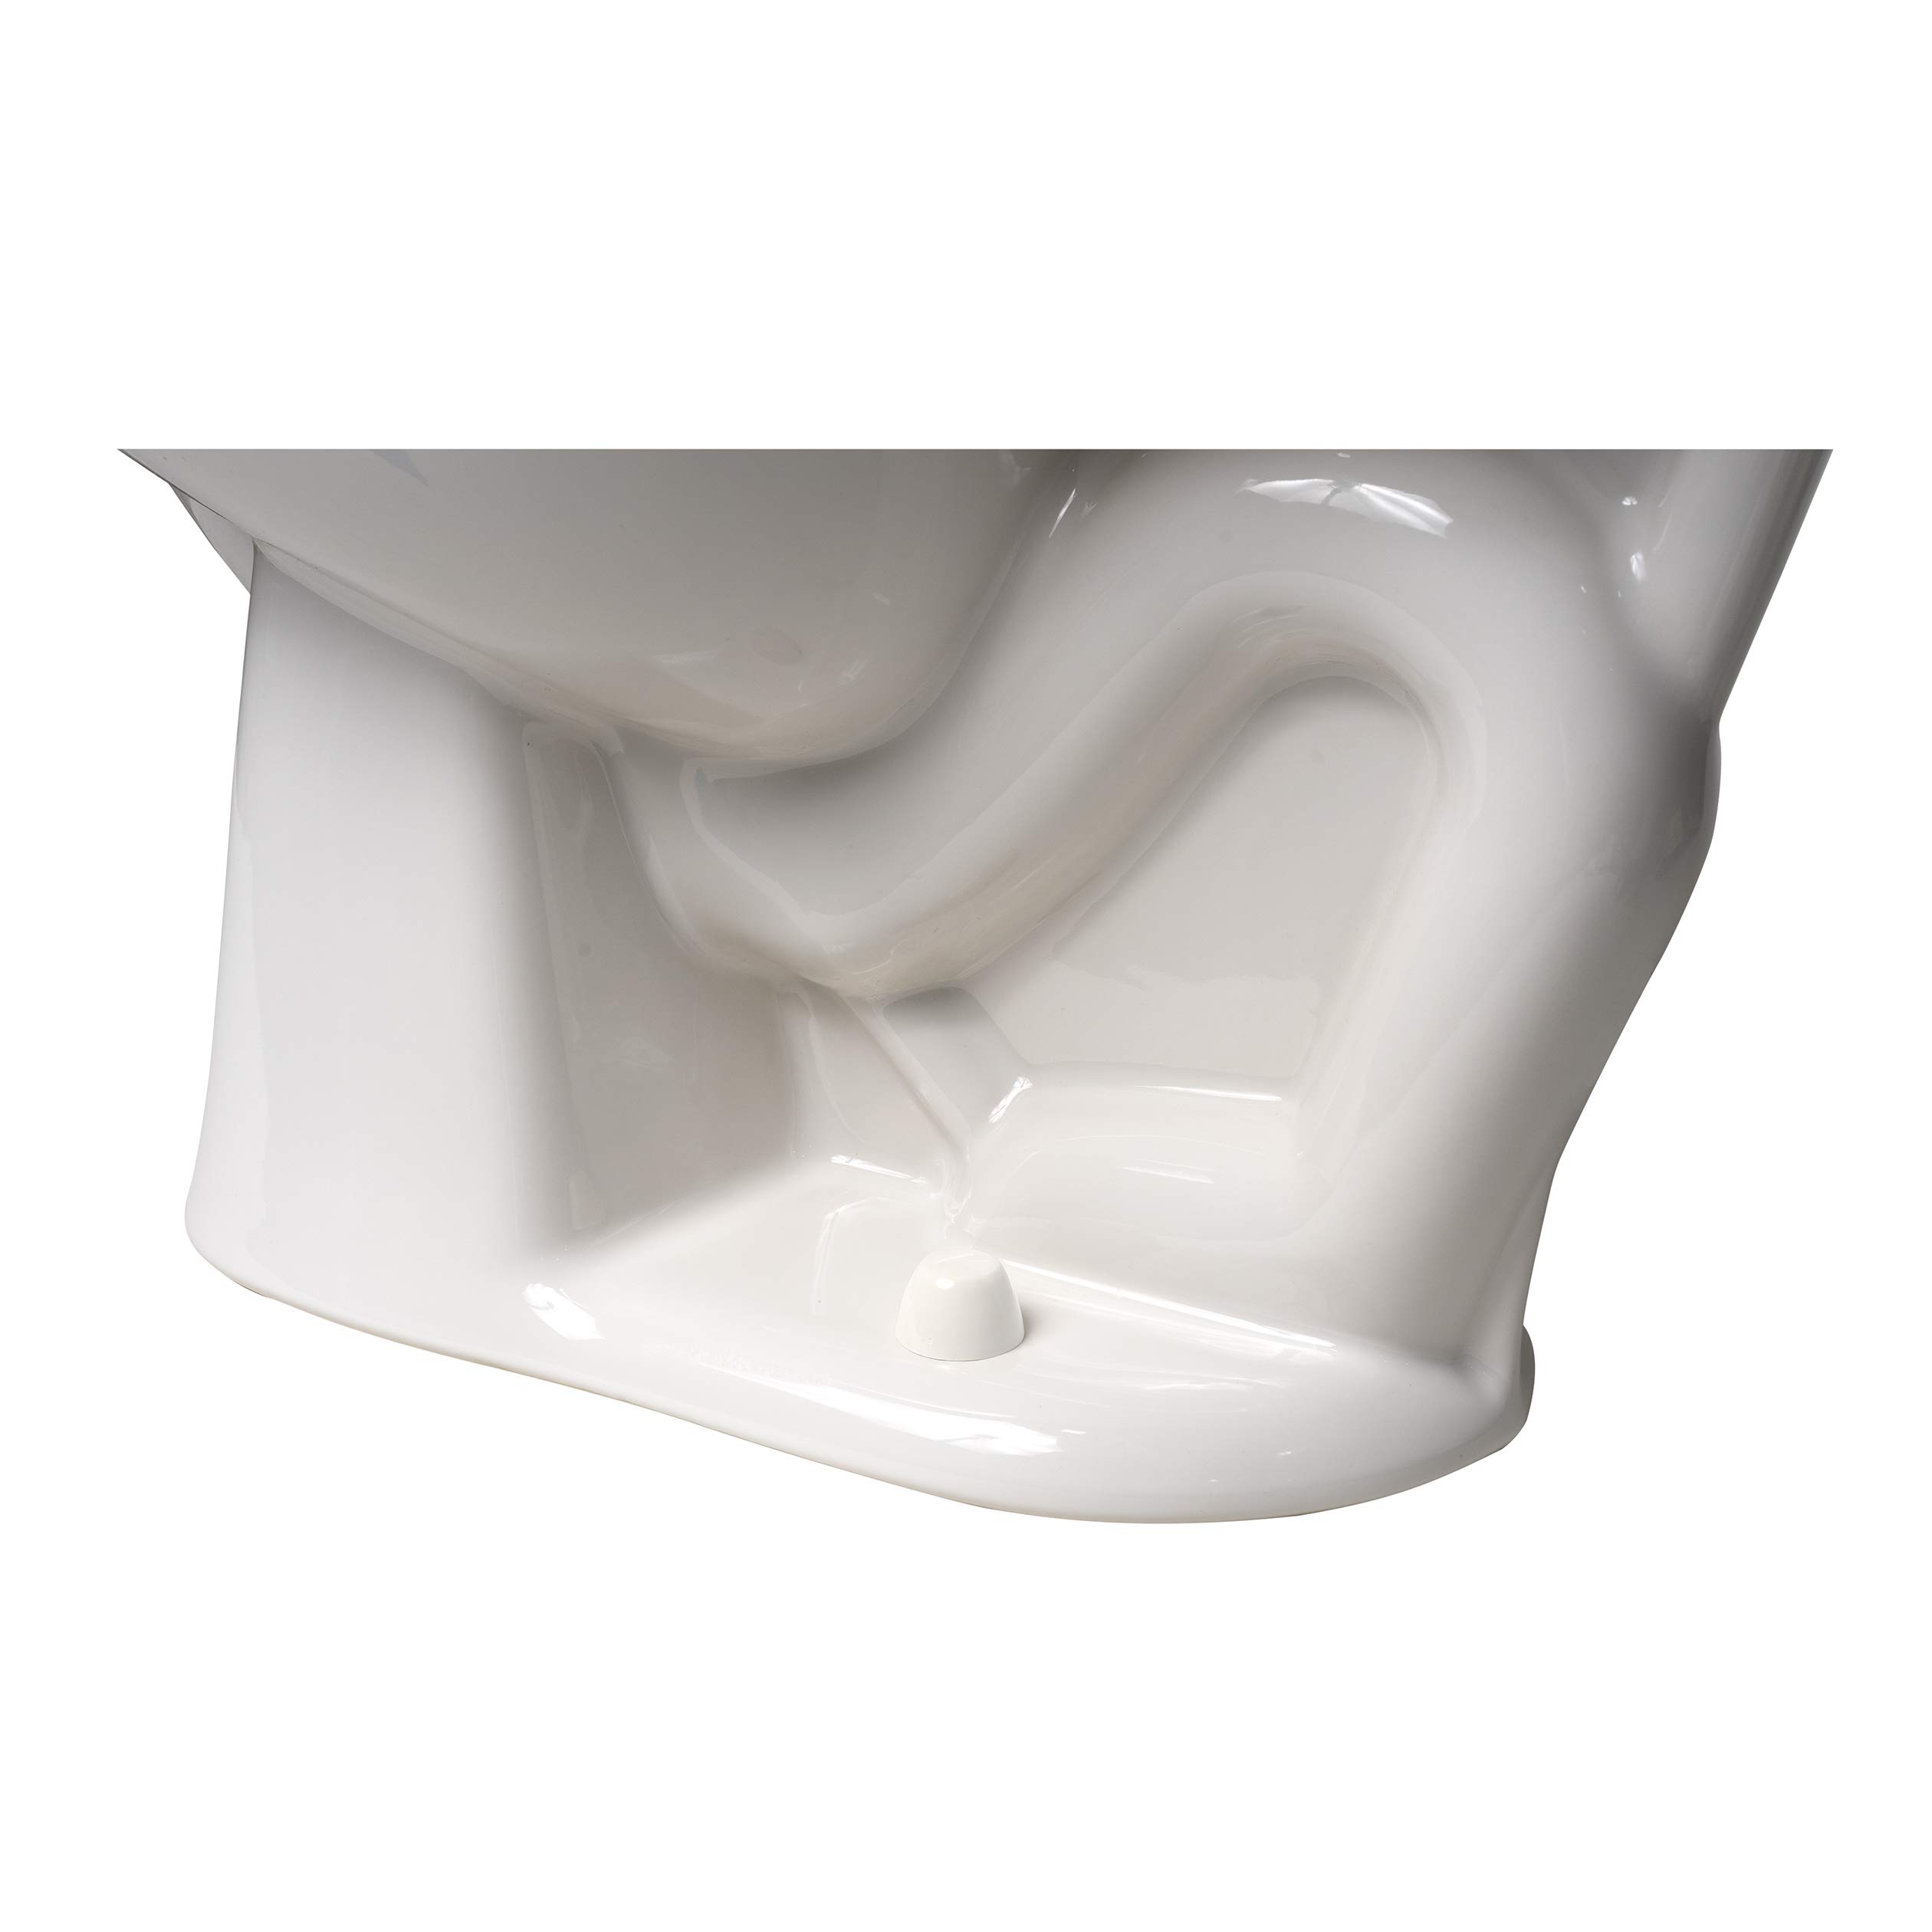 Plumb Pak PP23531 Universal Round Toilet Push-On Bolt Caps, Almond